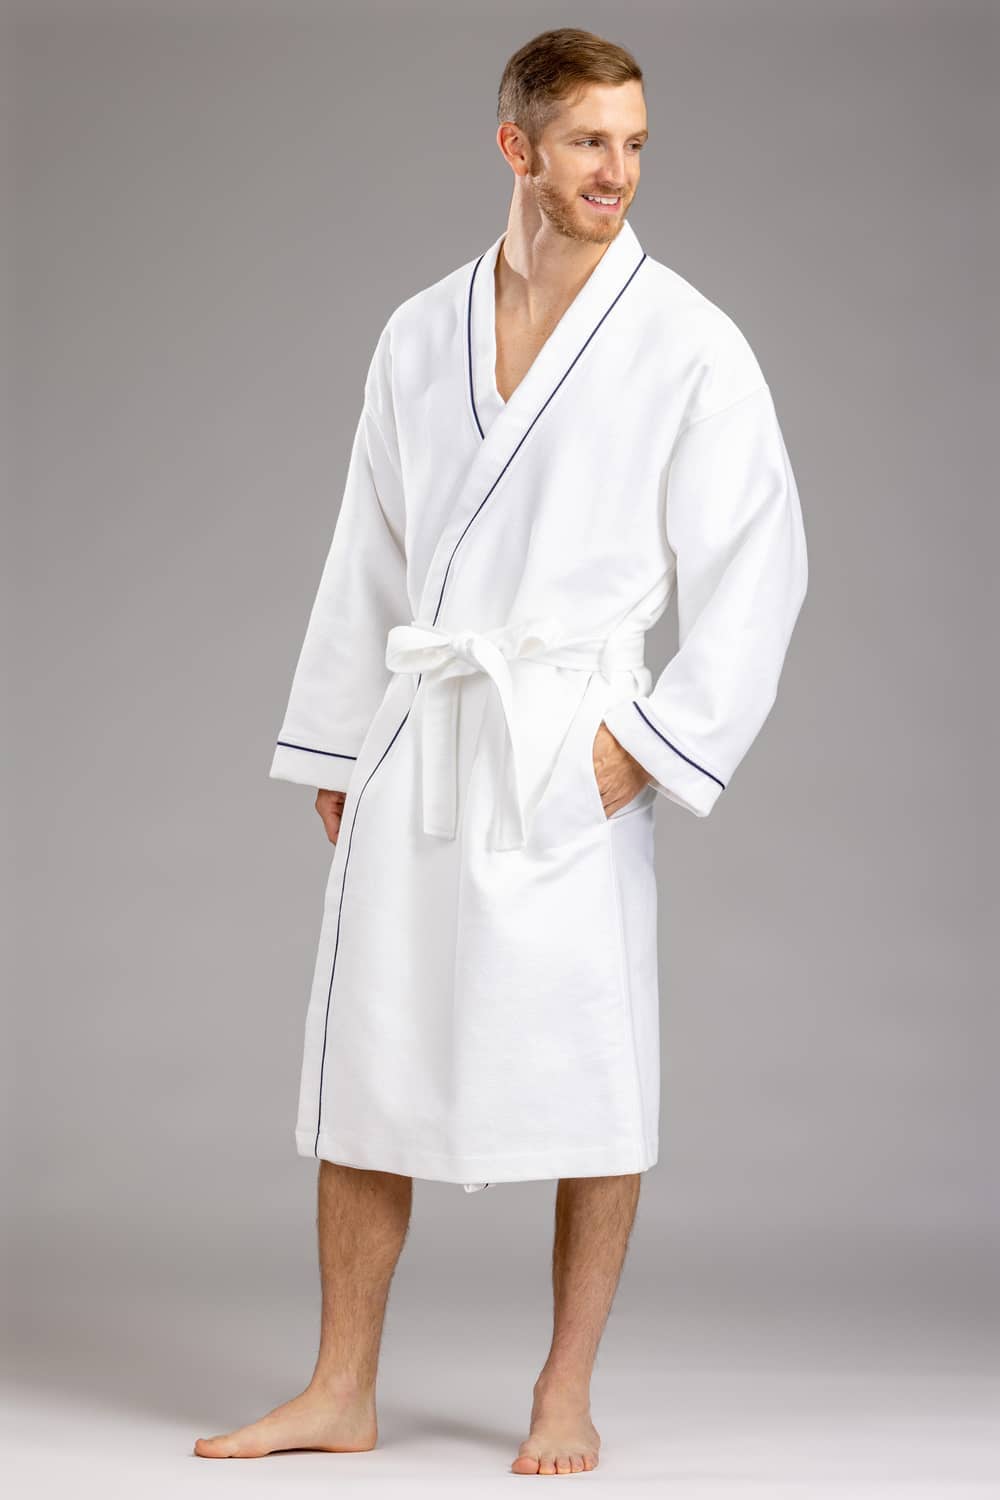 Texere Men's Modal Kimono Bathrobe with Quilted Design Mens>Sleepwear>Robe Fishers Finery WHITE MEDIUM 